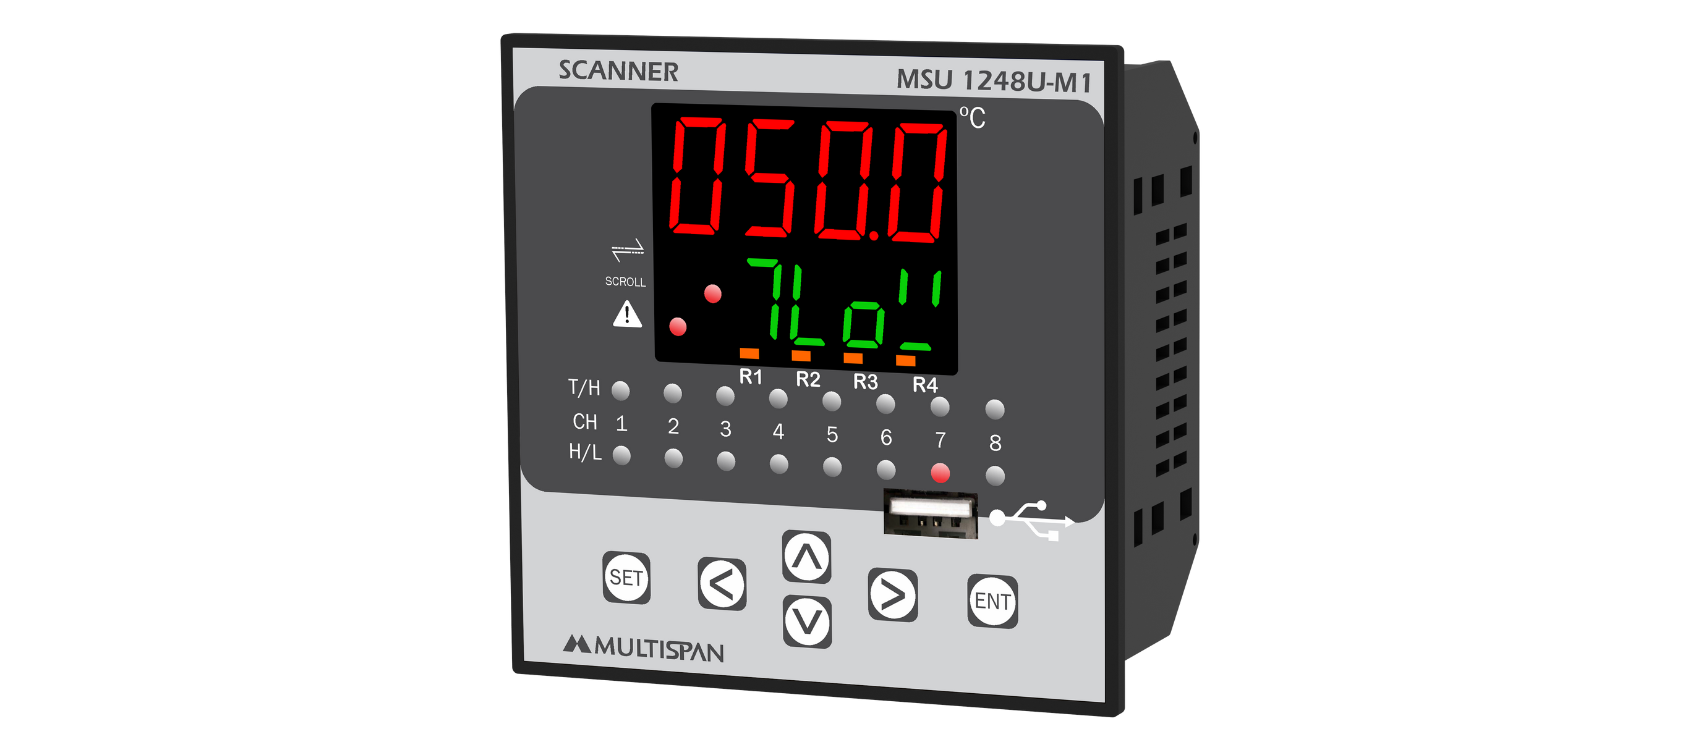 MSU-1248U-M1 - 8 Channel Scanner - product image